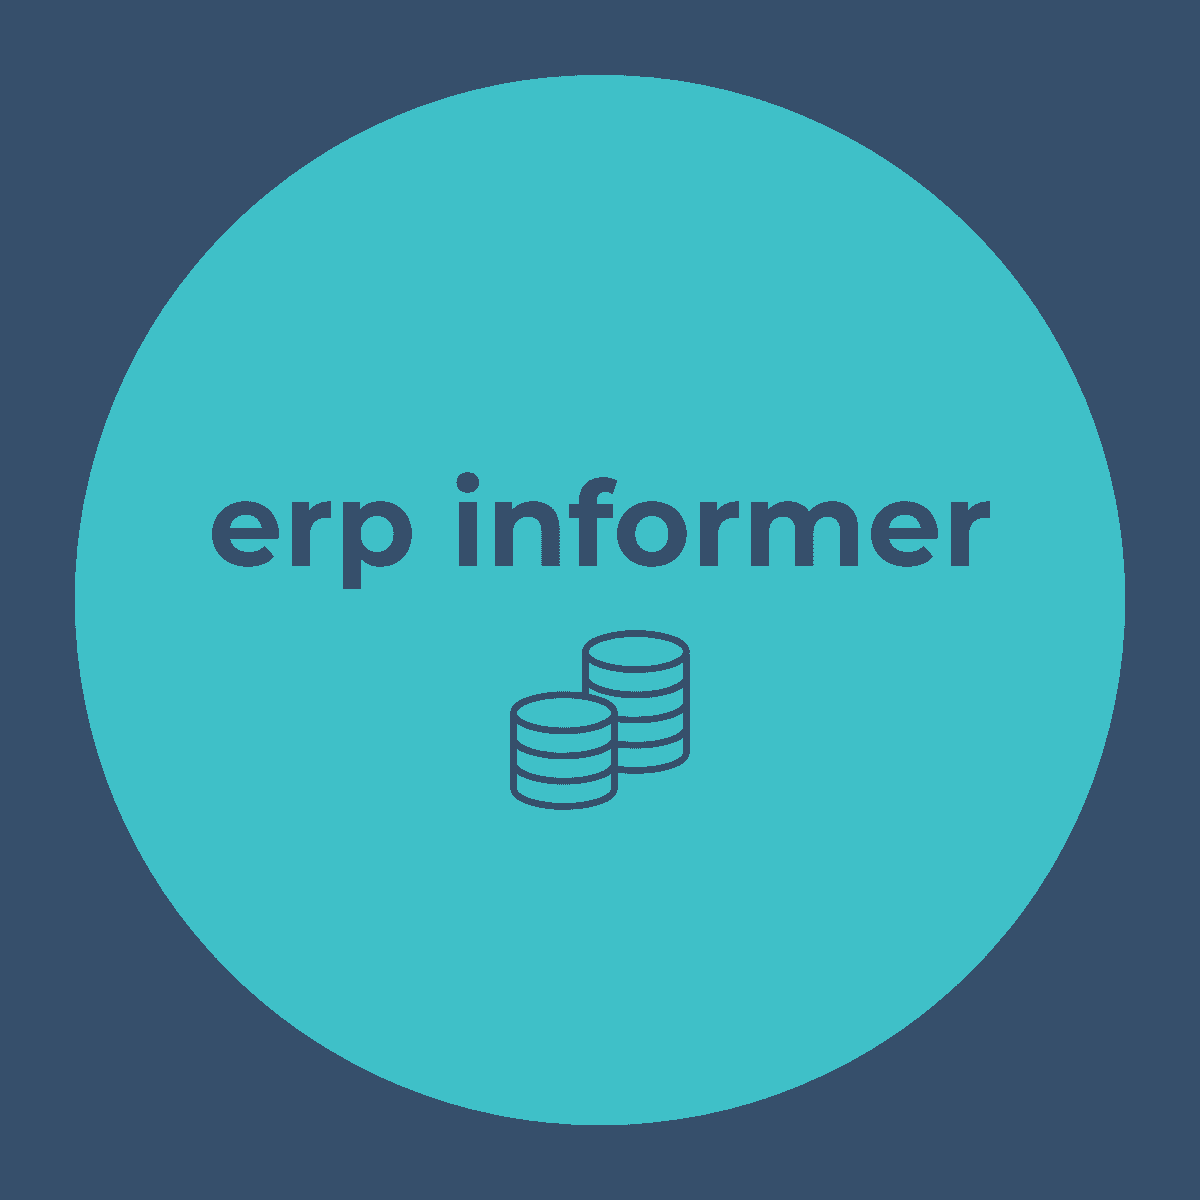 The ERP Informer